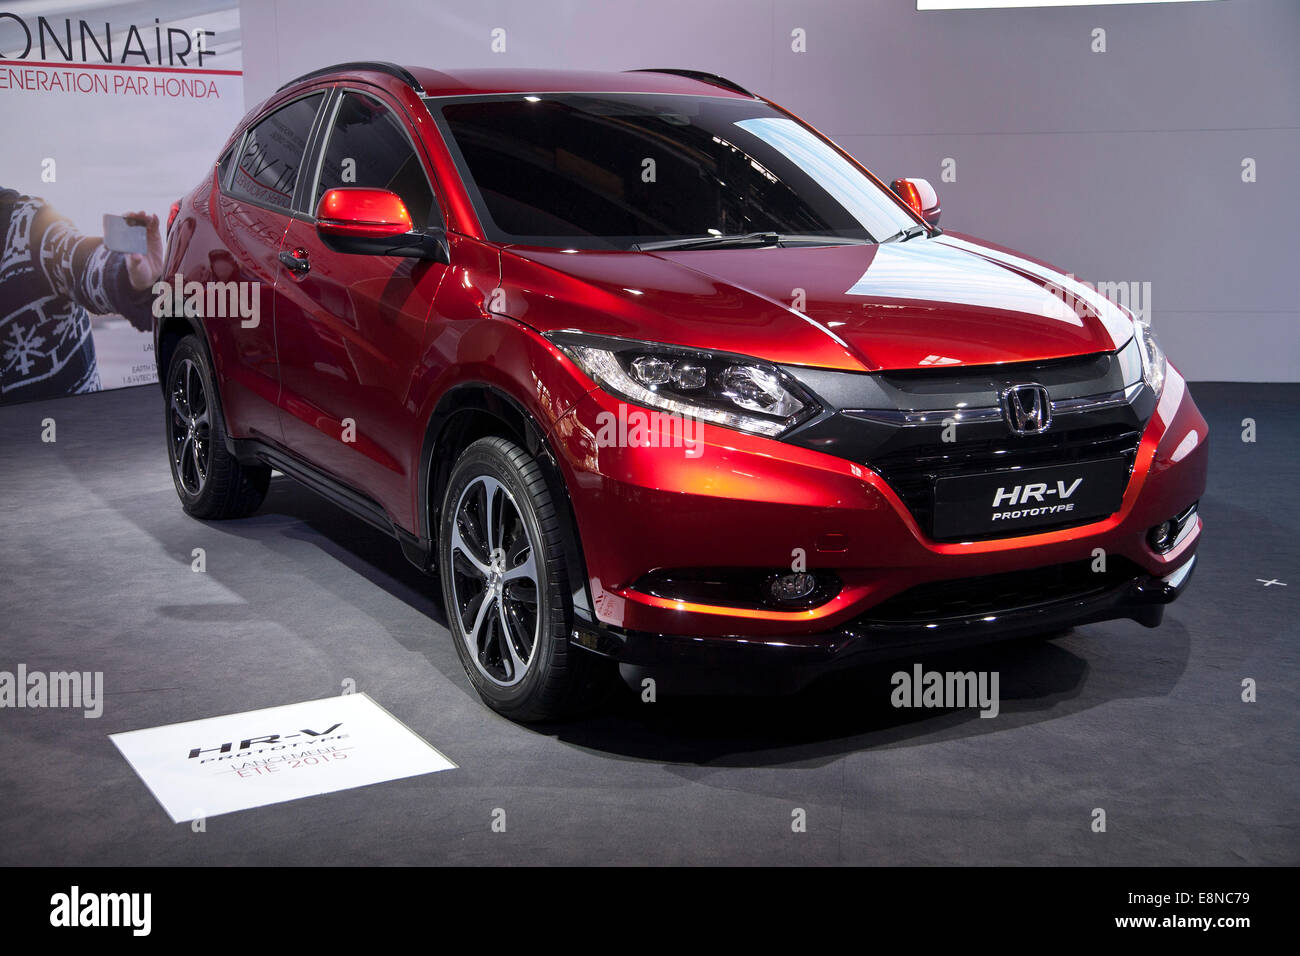 Honda HR-V prototype Paris Motor Show Mondial de l'Automobile 2014 Stock Photo